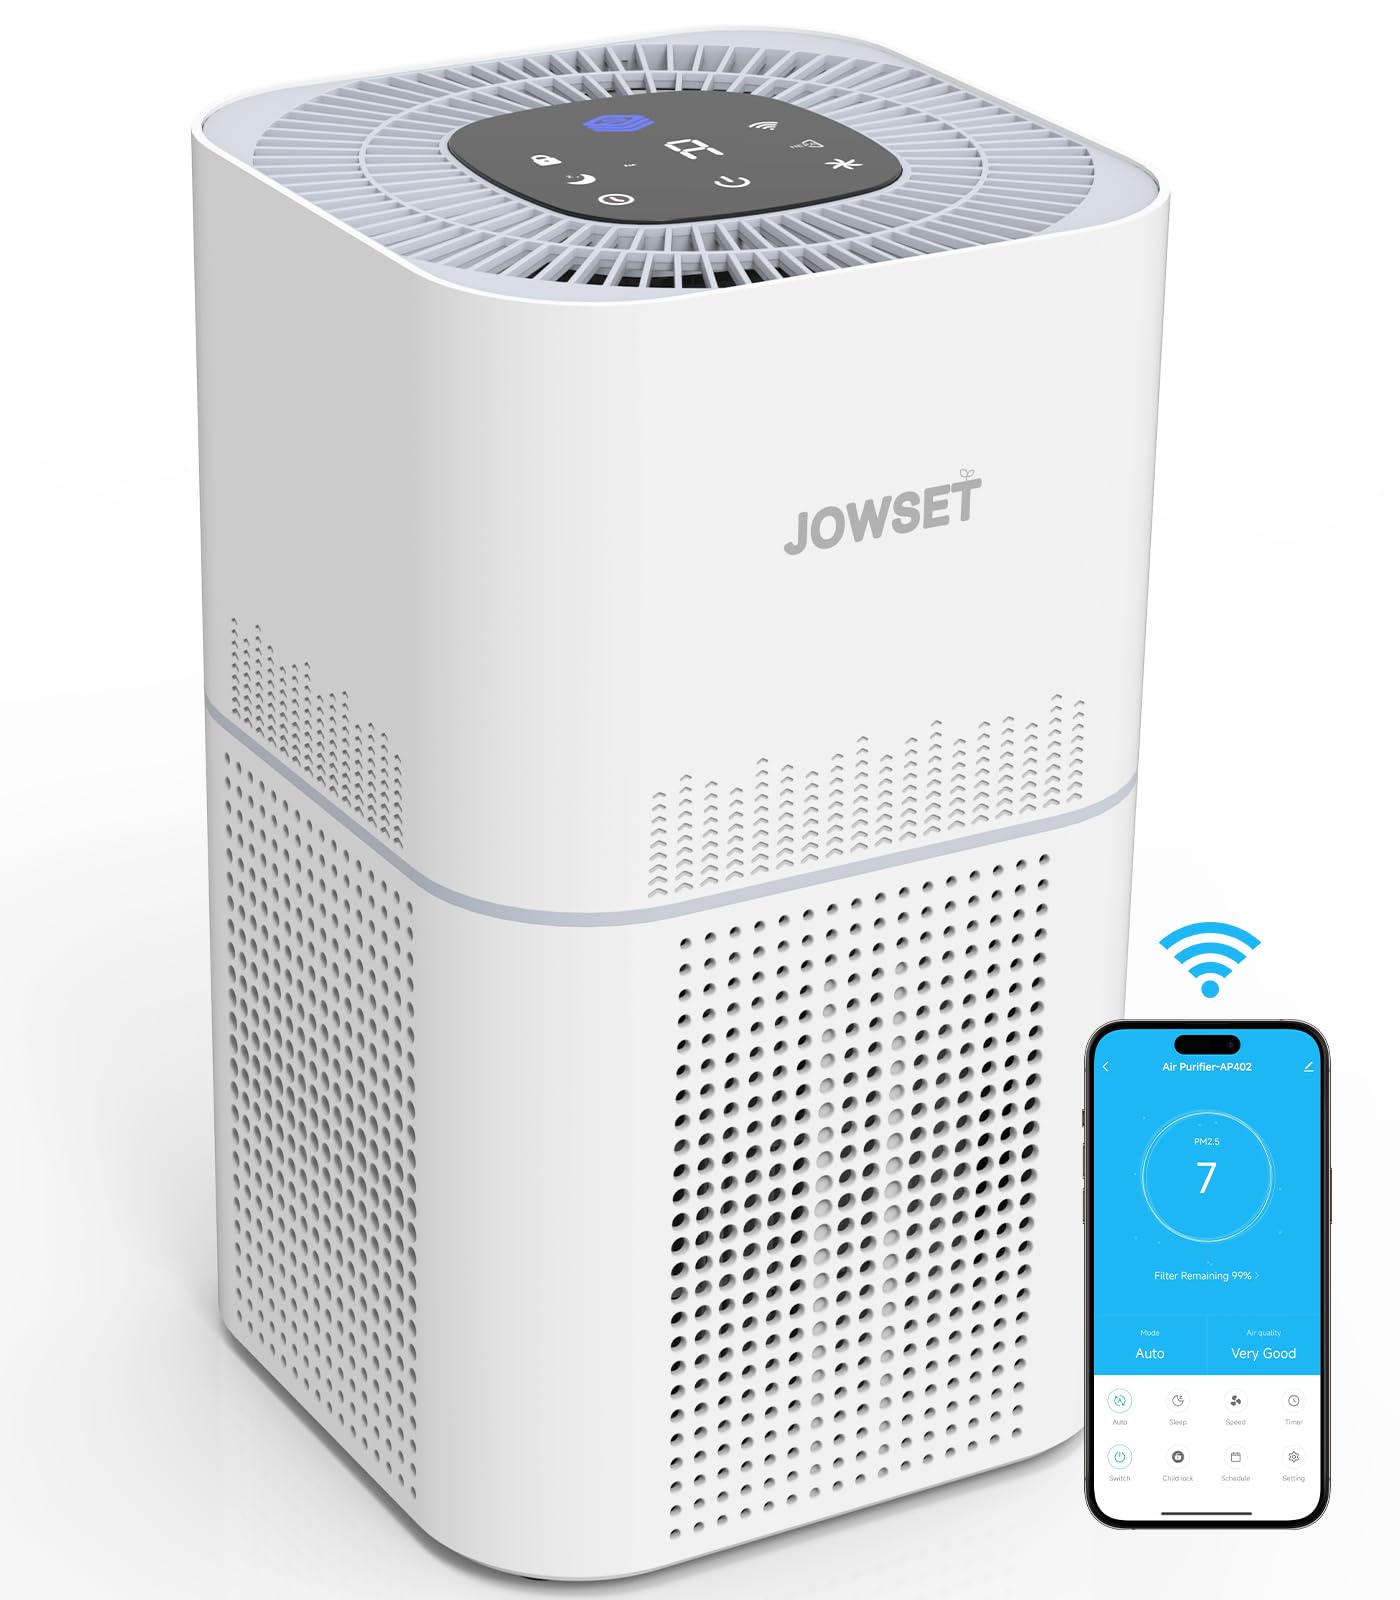 JOWSET Smart Wi-Fi Air Purifier